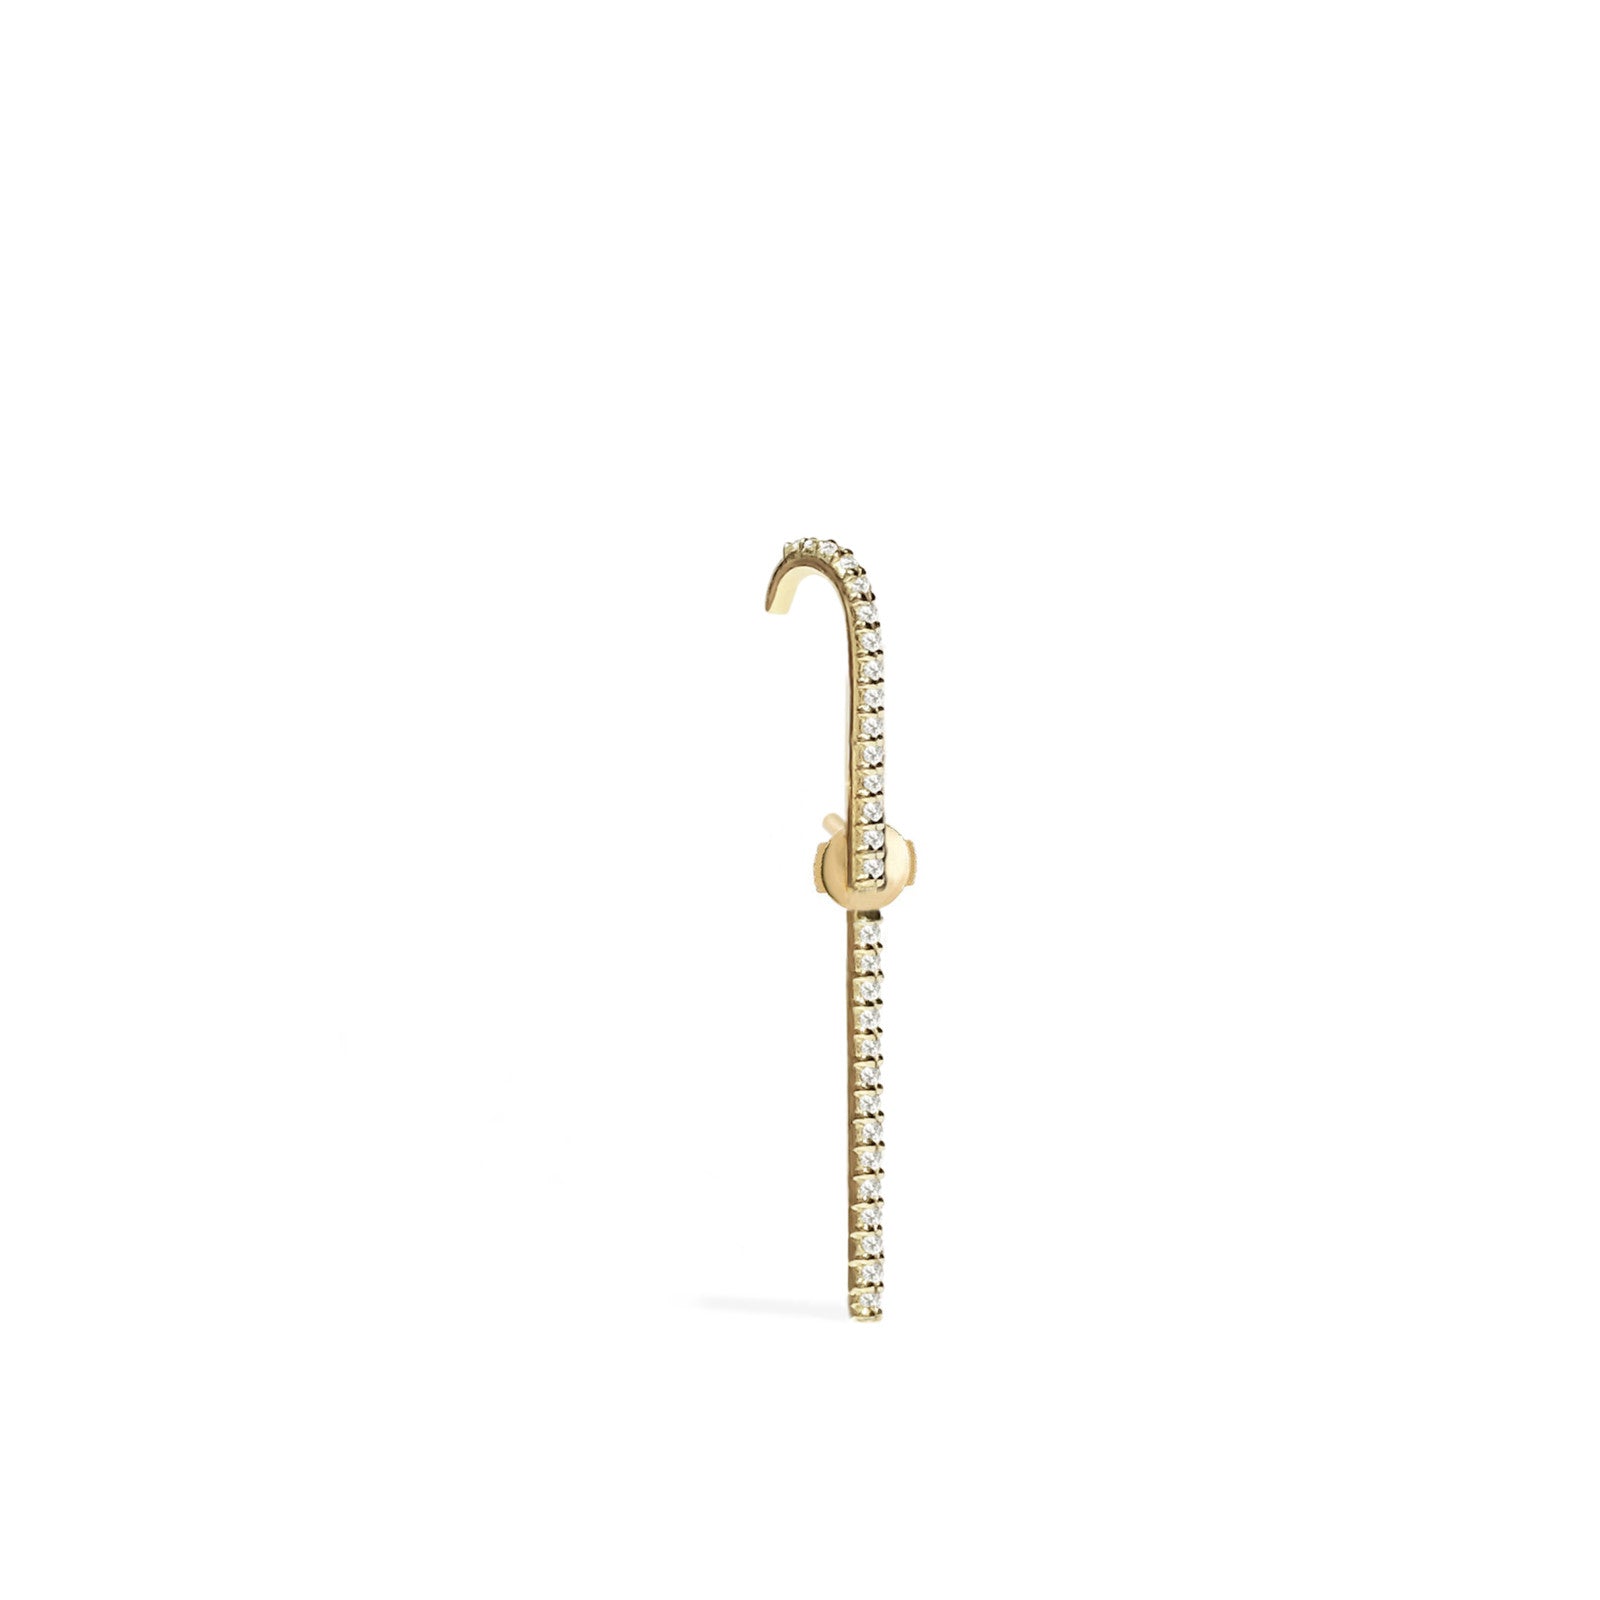 The Petite Ear Pin - 18 Karat Yellow Gold with Diamonds